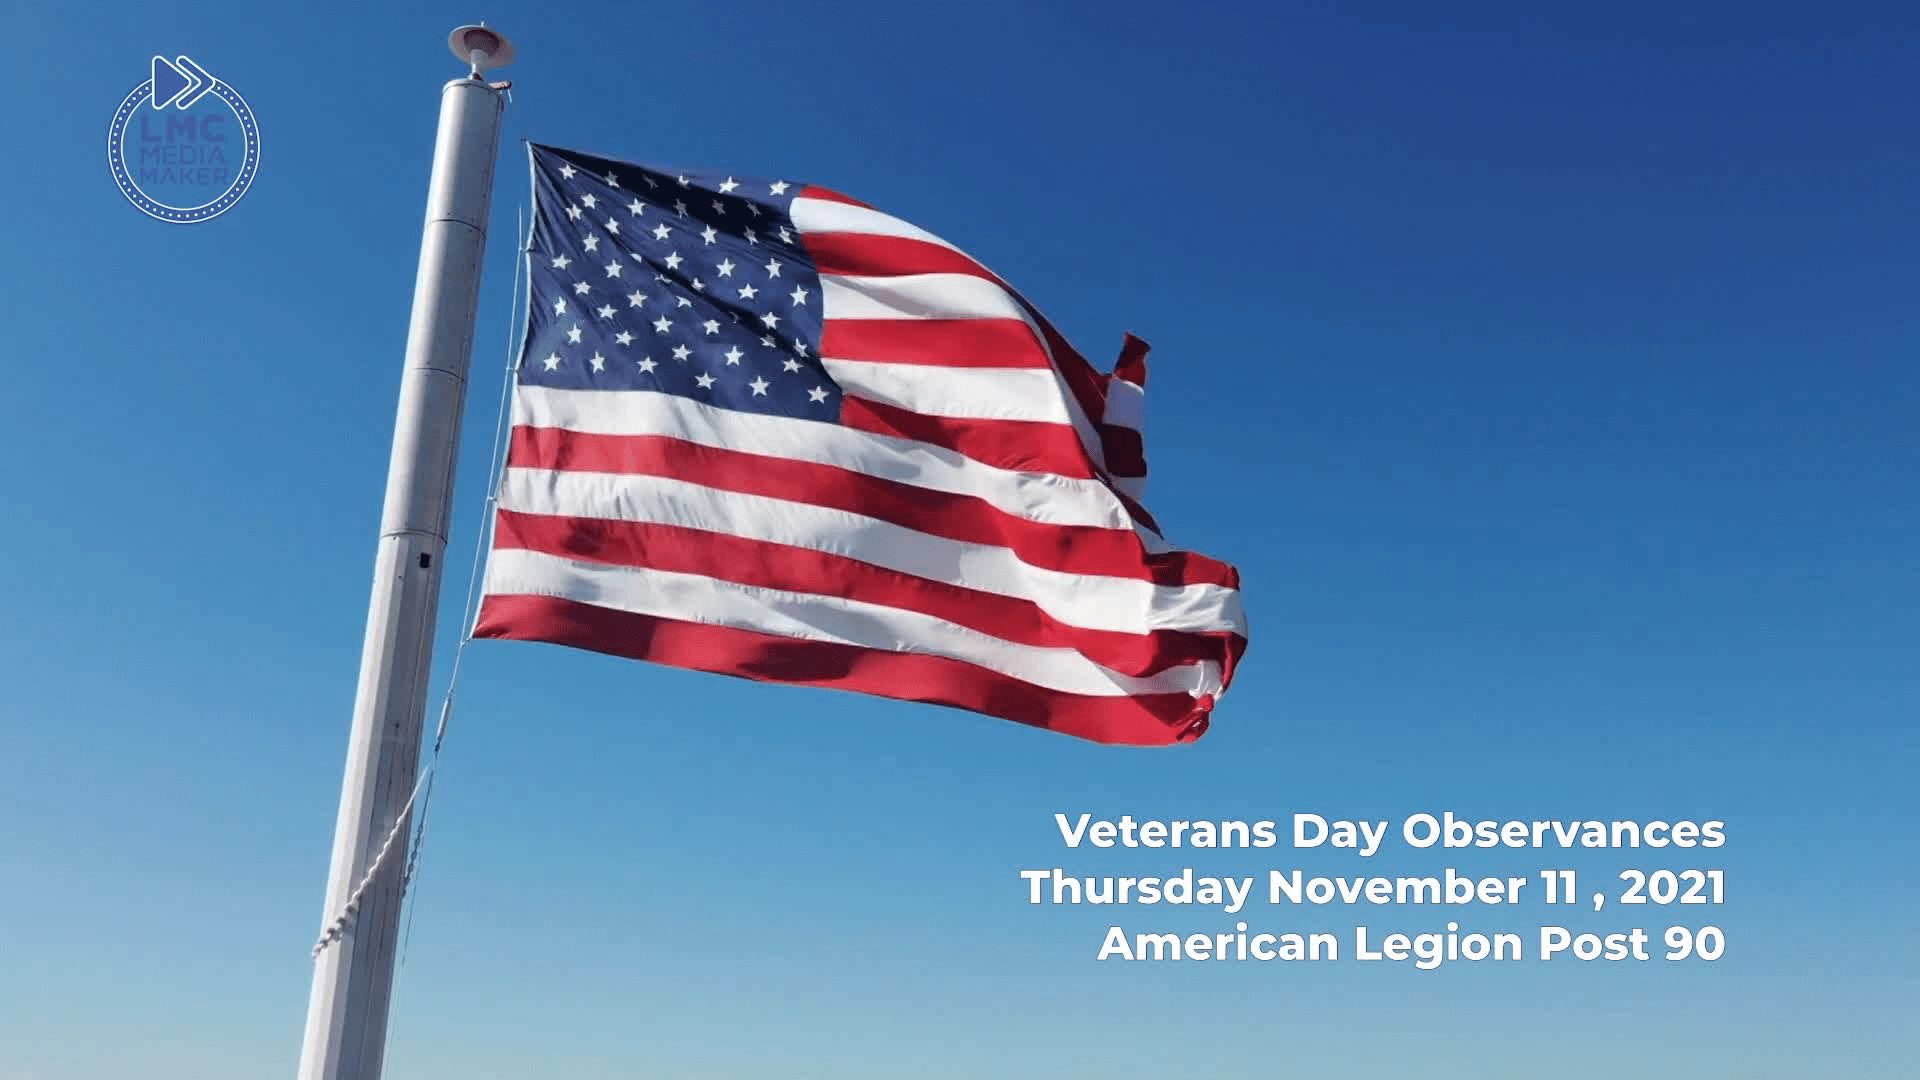 American Legion Post 90 Veterans Day Observance 2021 LMC Media